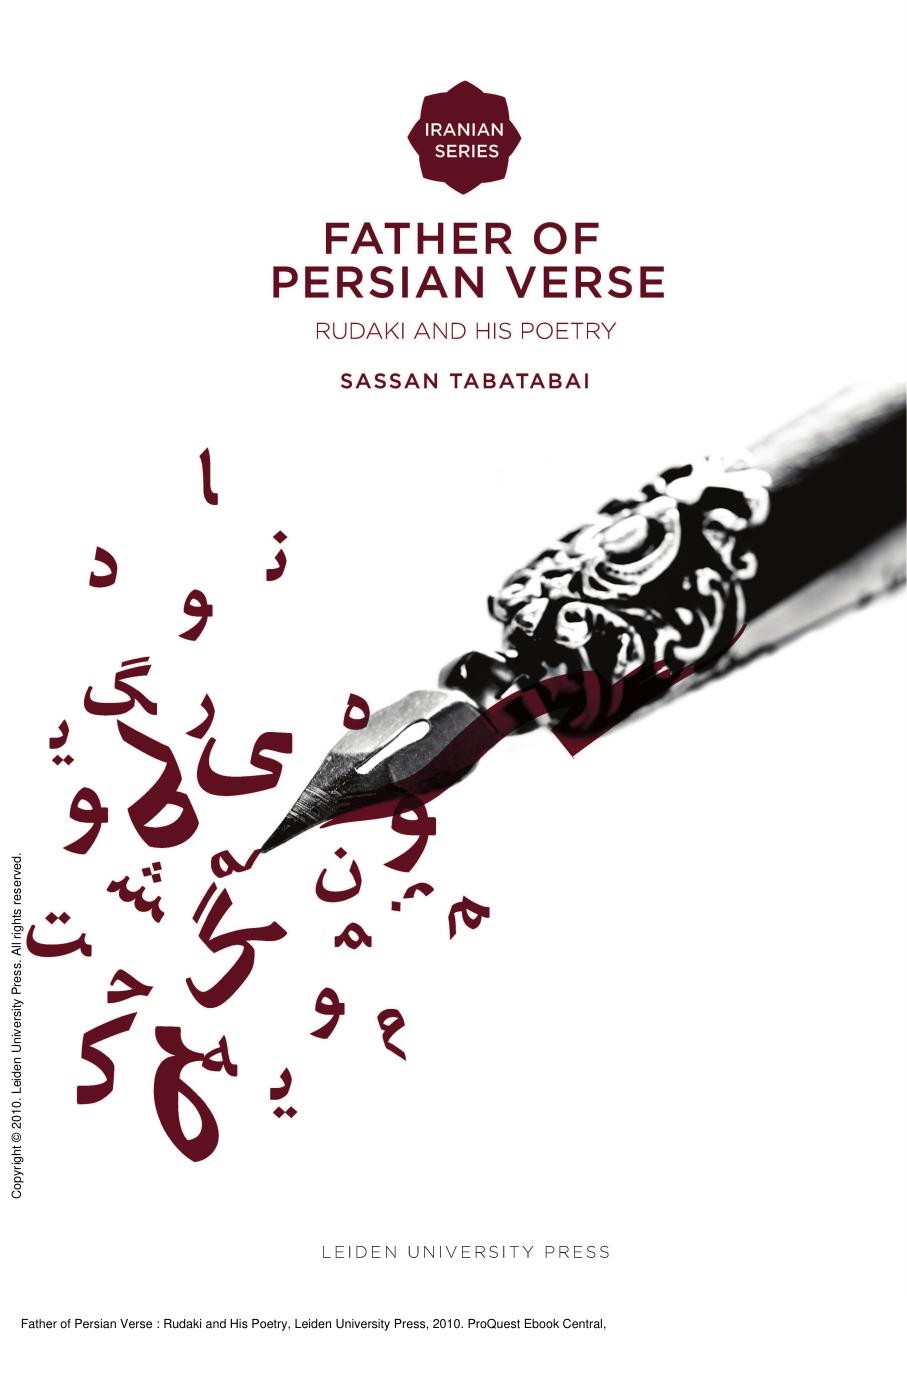 Father of Persian Verse : Rudaki and His Poetry by Sassan Tabatabai